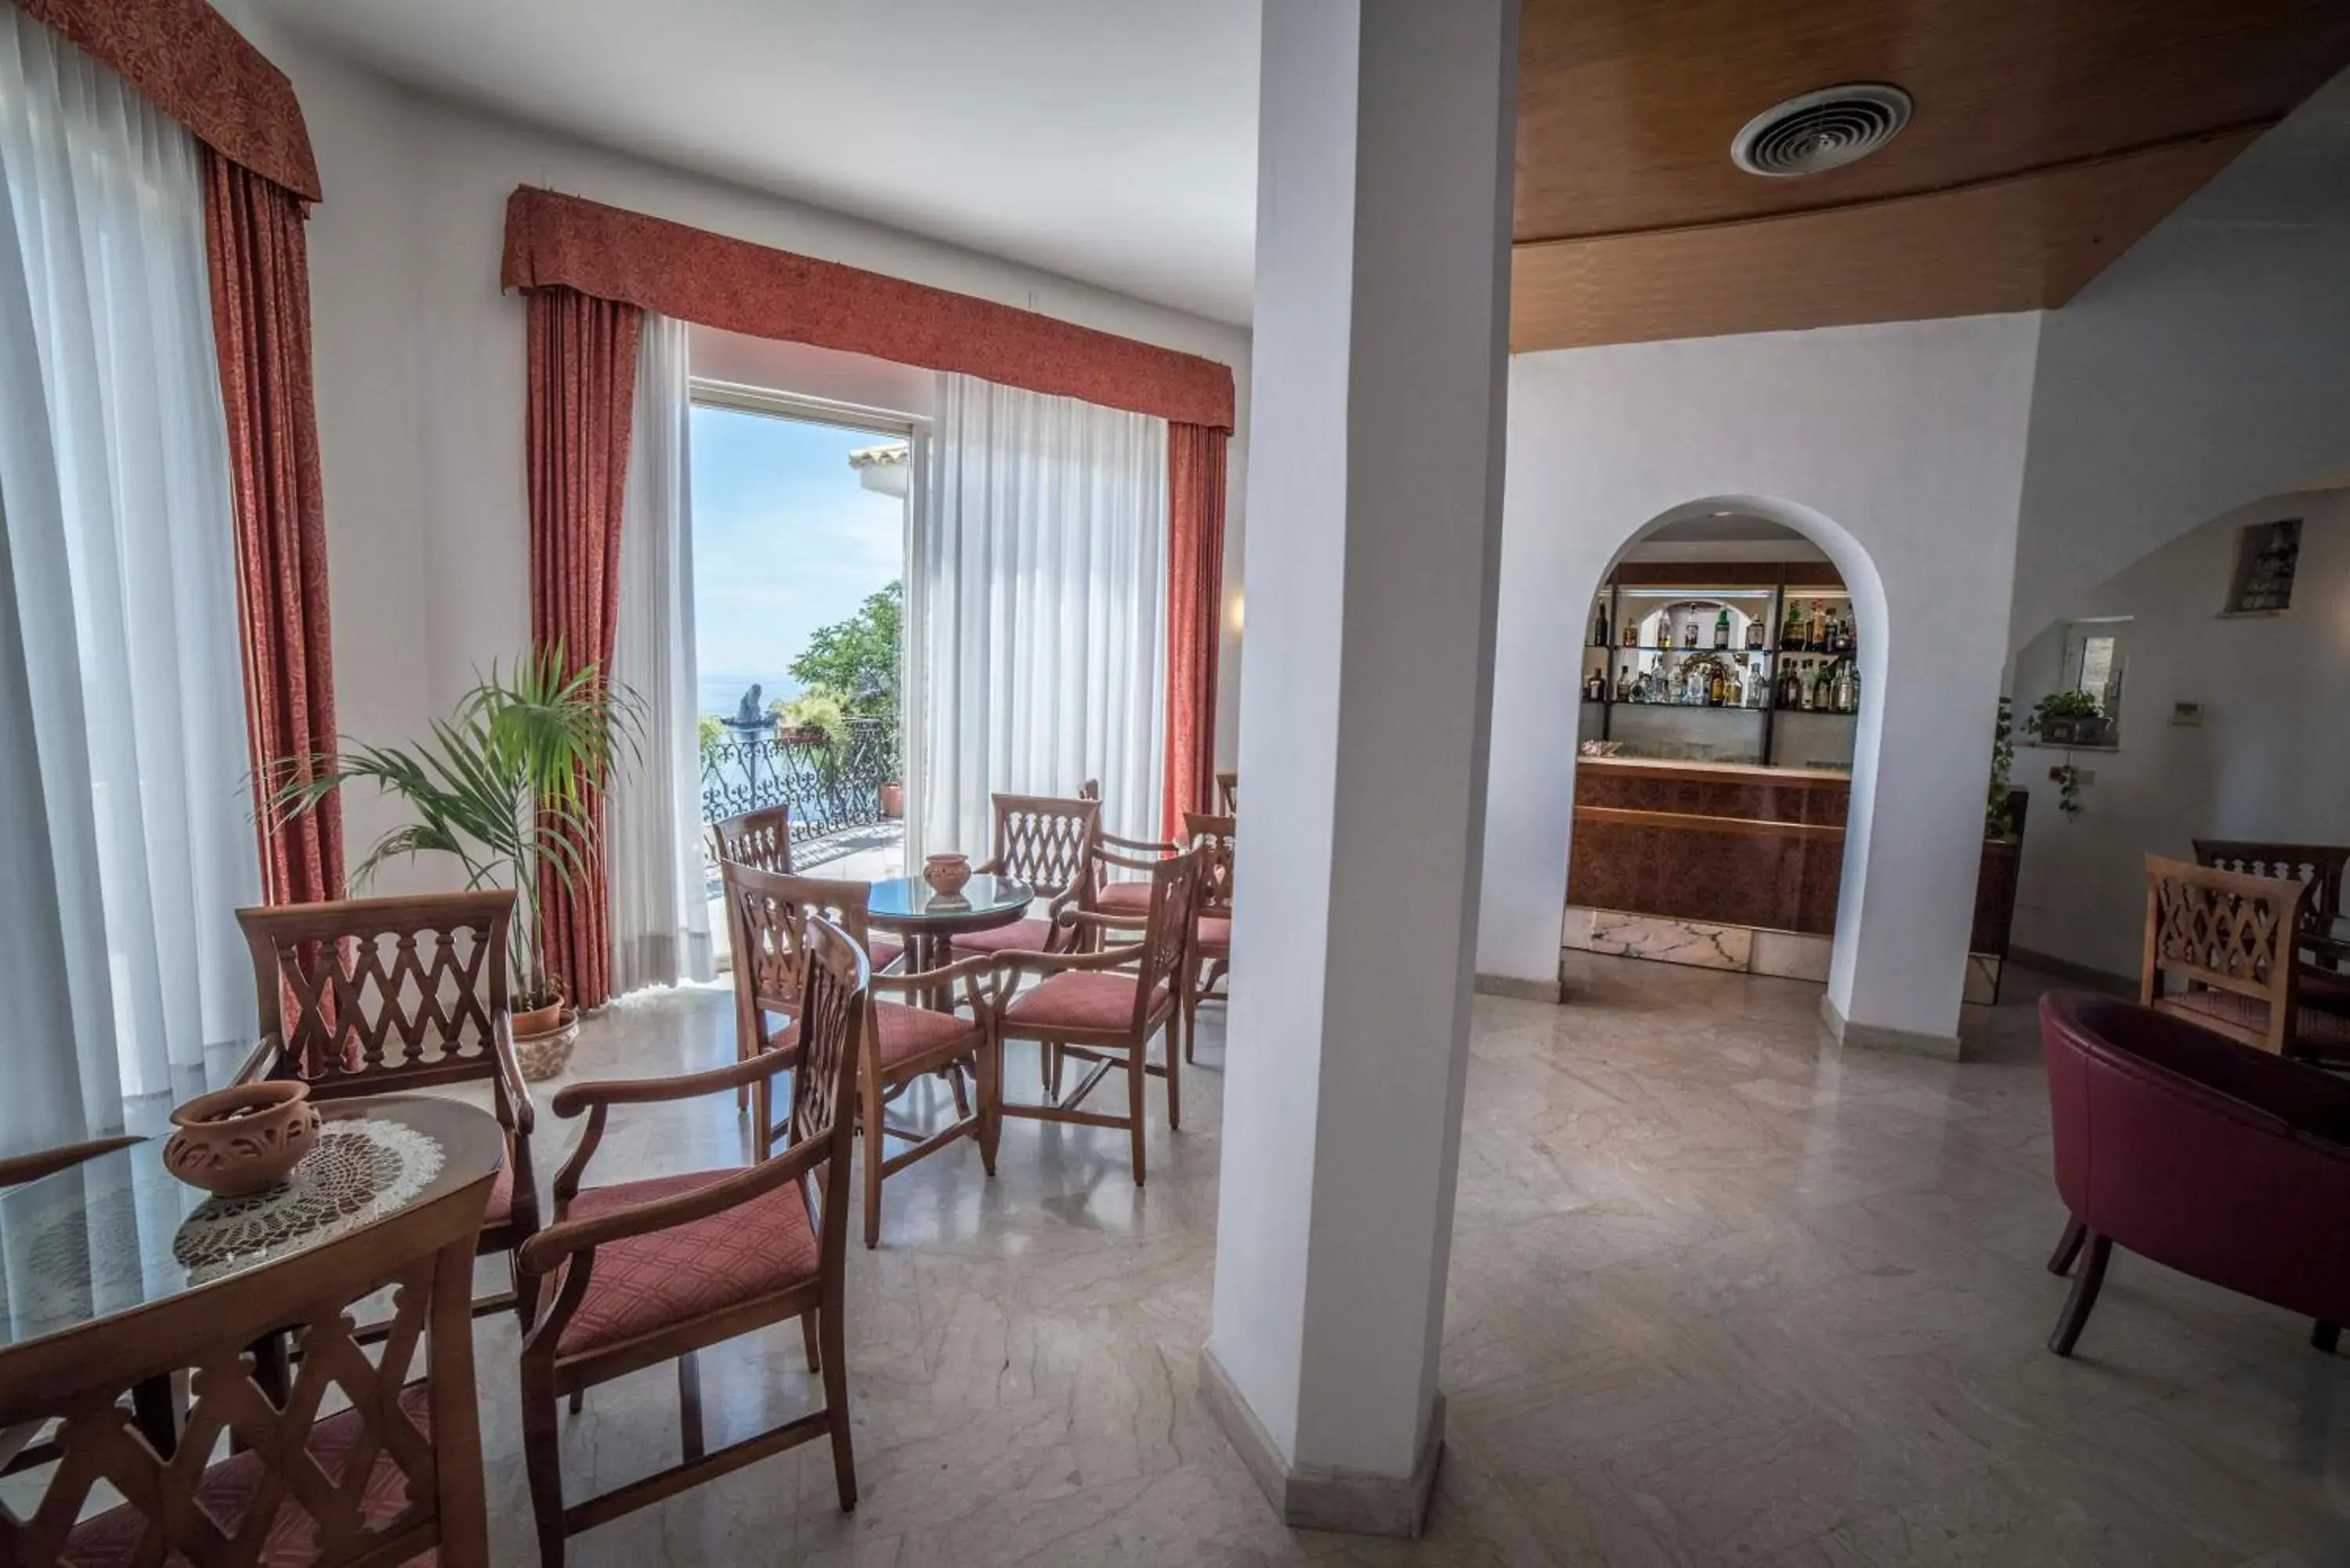 Lobby or reception in Hotel Isola Bella